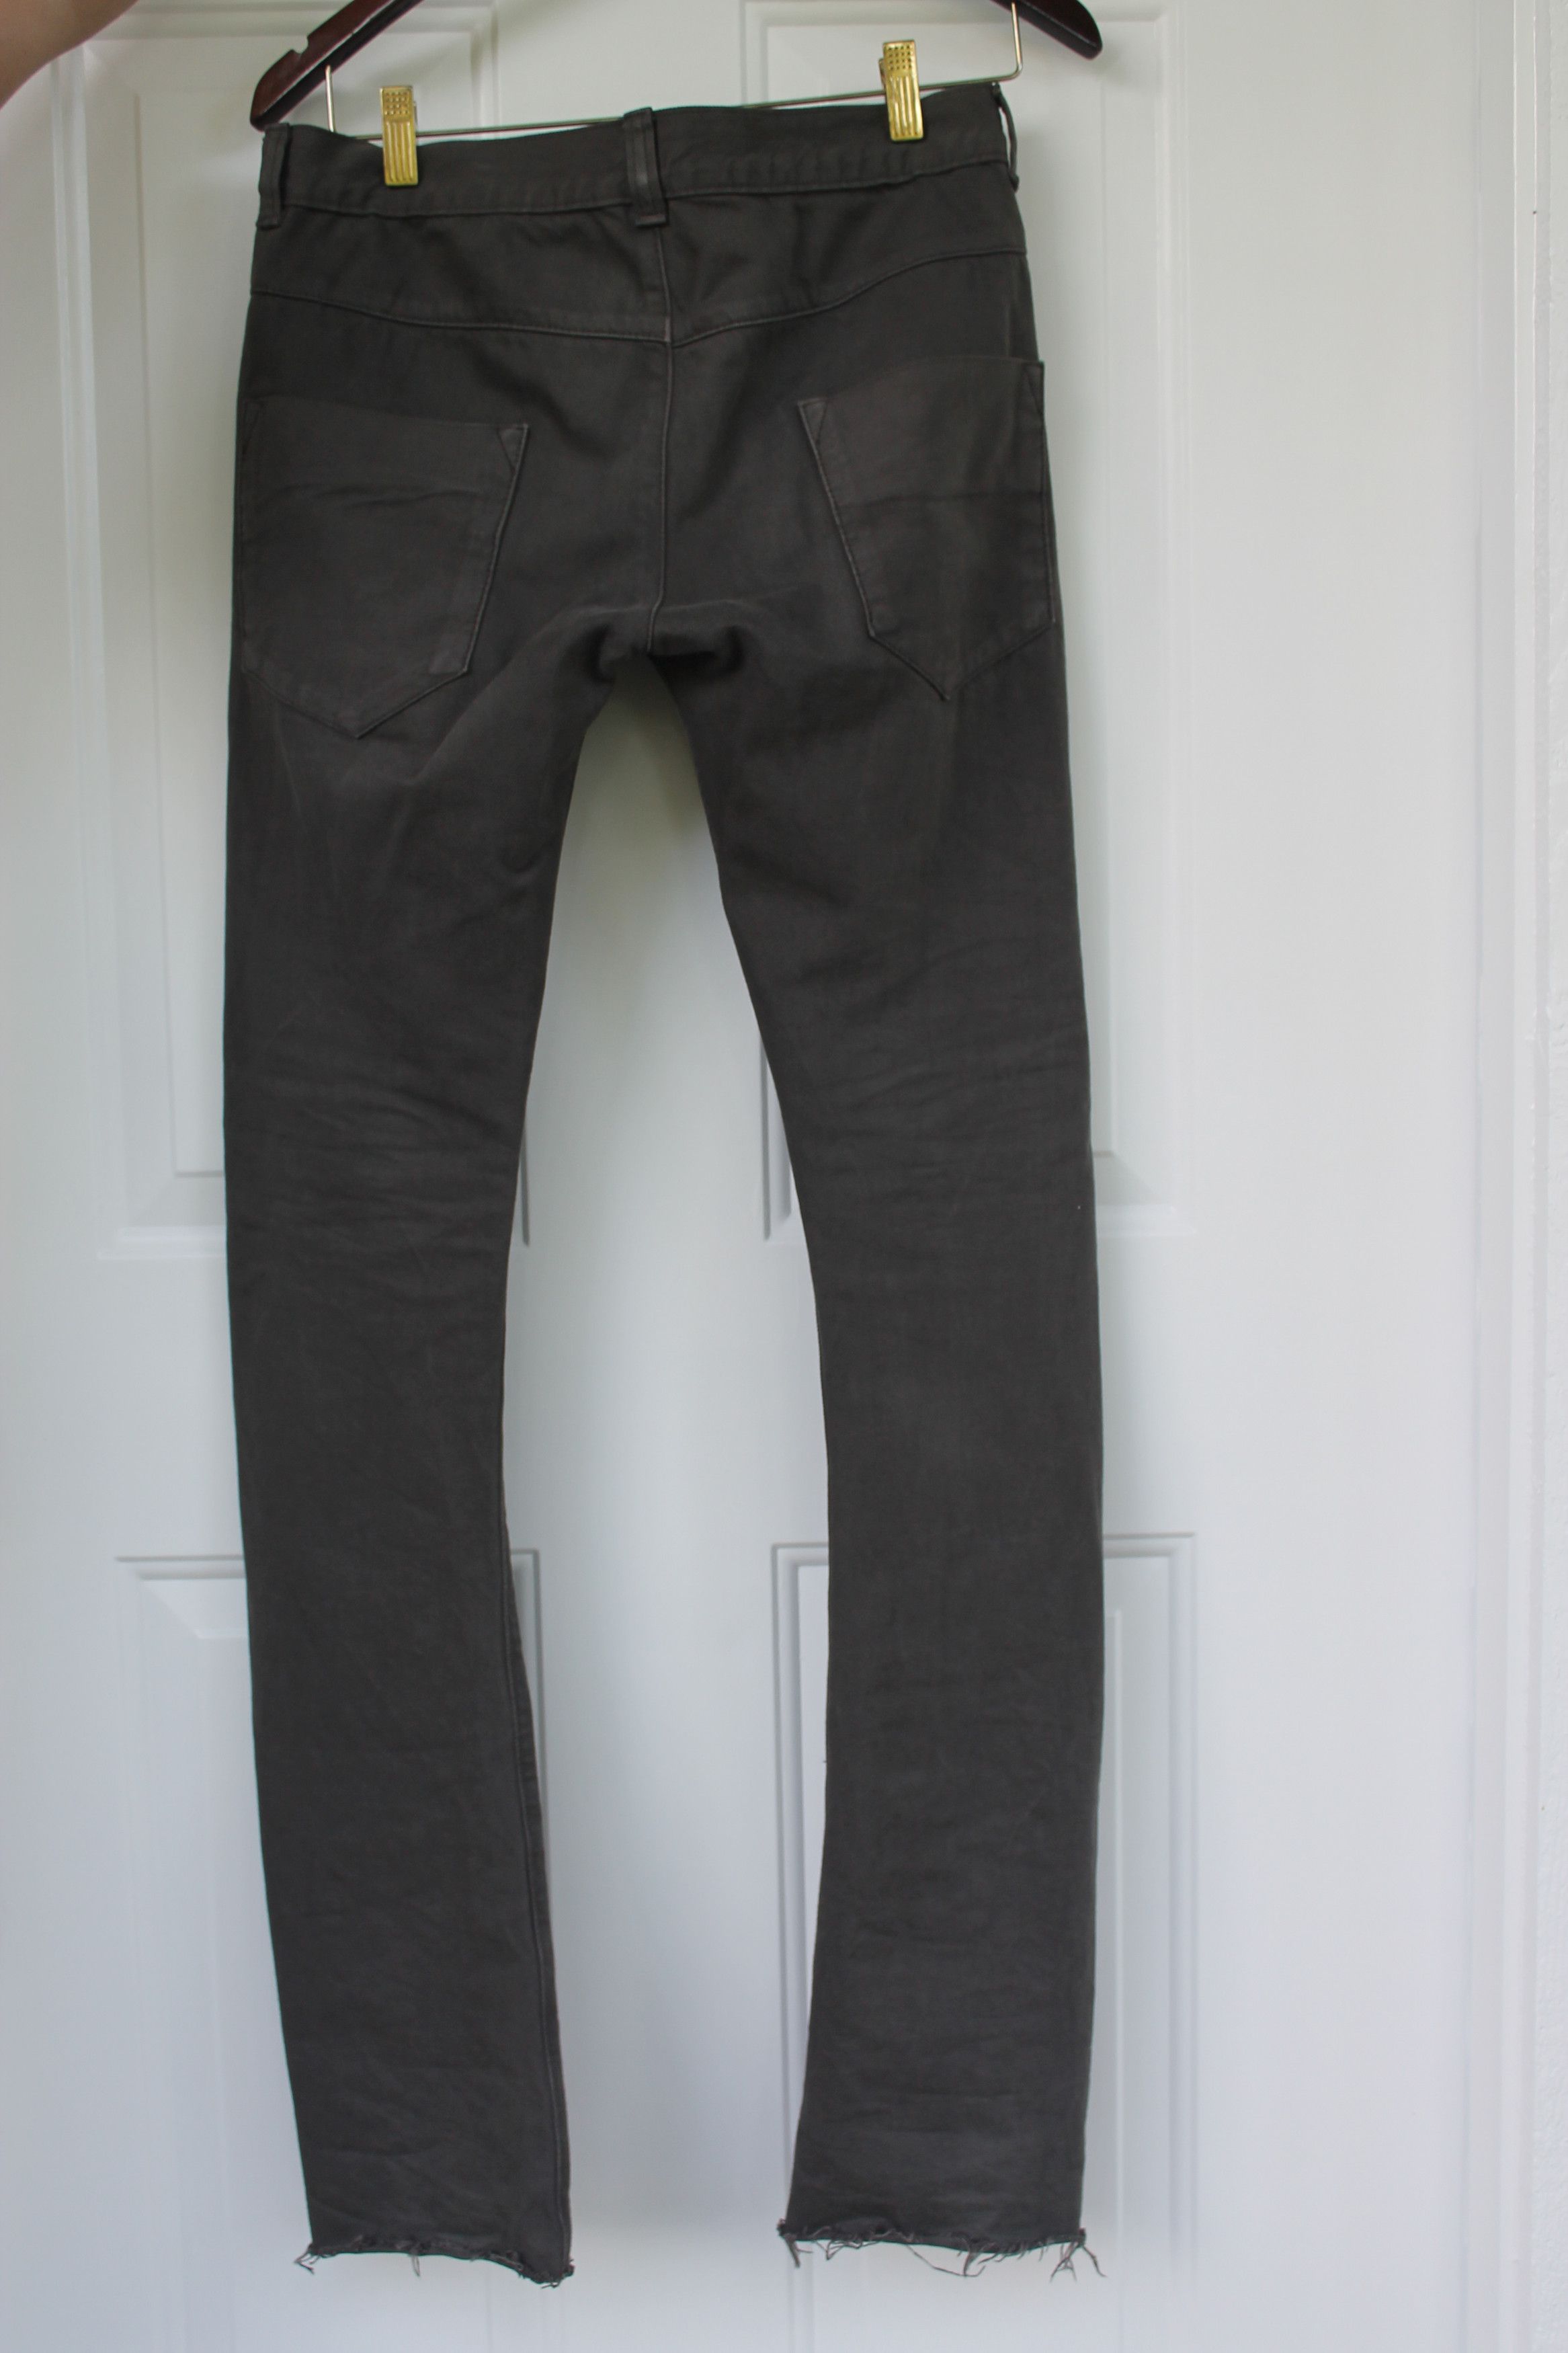 Damir Doma Dark Grey Rough Hem Jeans Size US 28 / EU 44 - 2 Preview